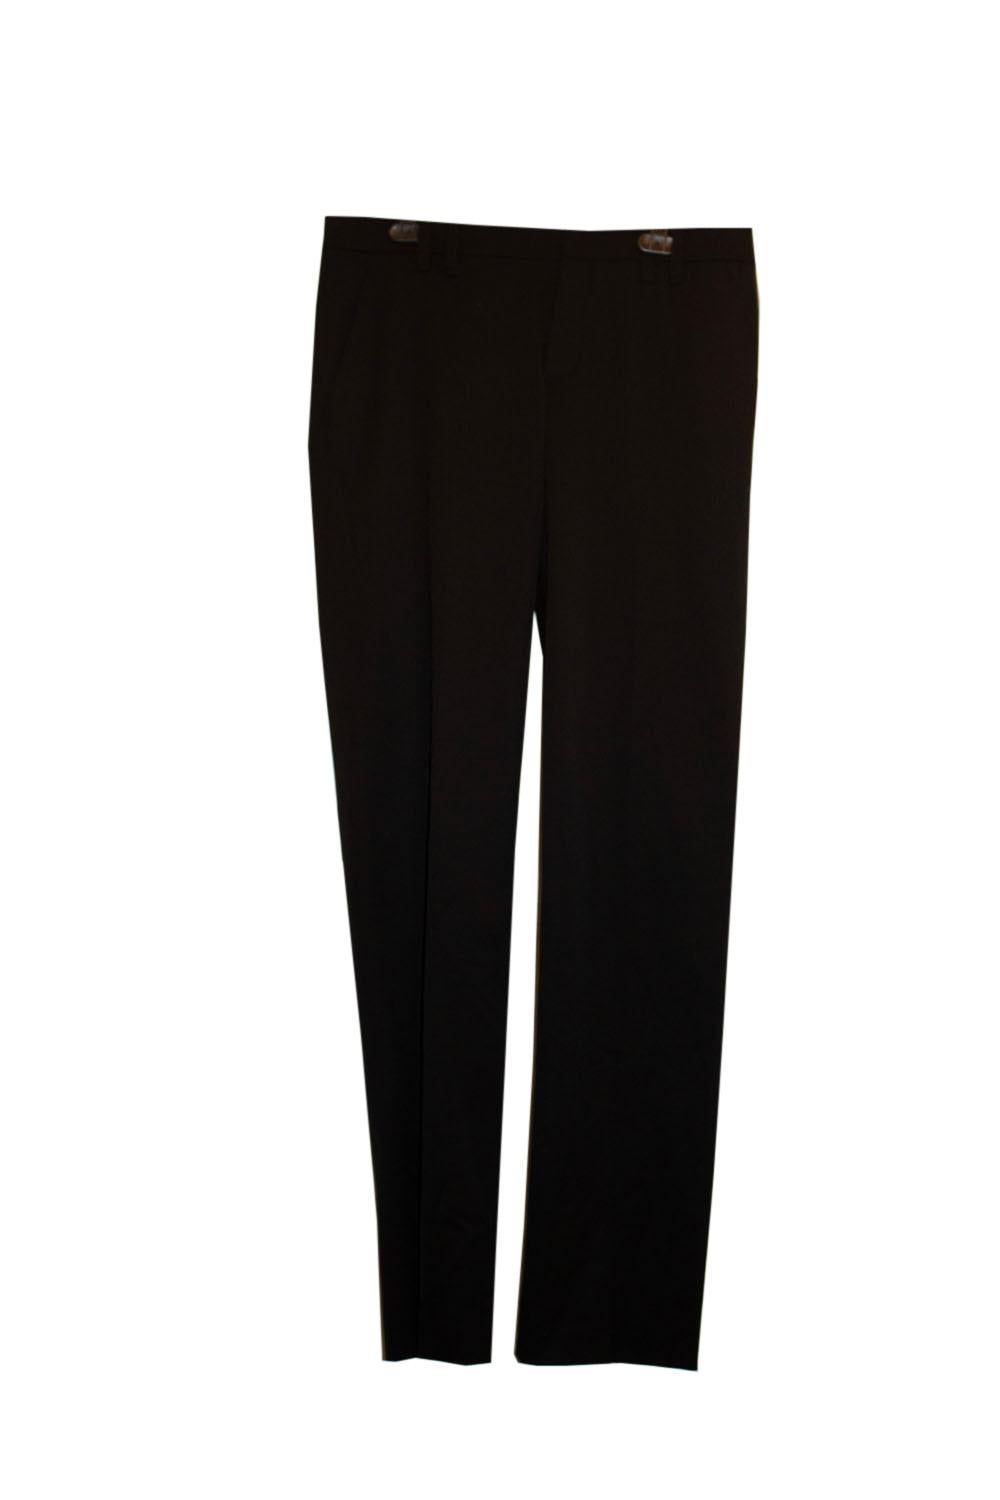 Black Prada Wool Trousers / Pants For Sale 2